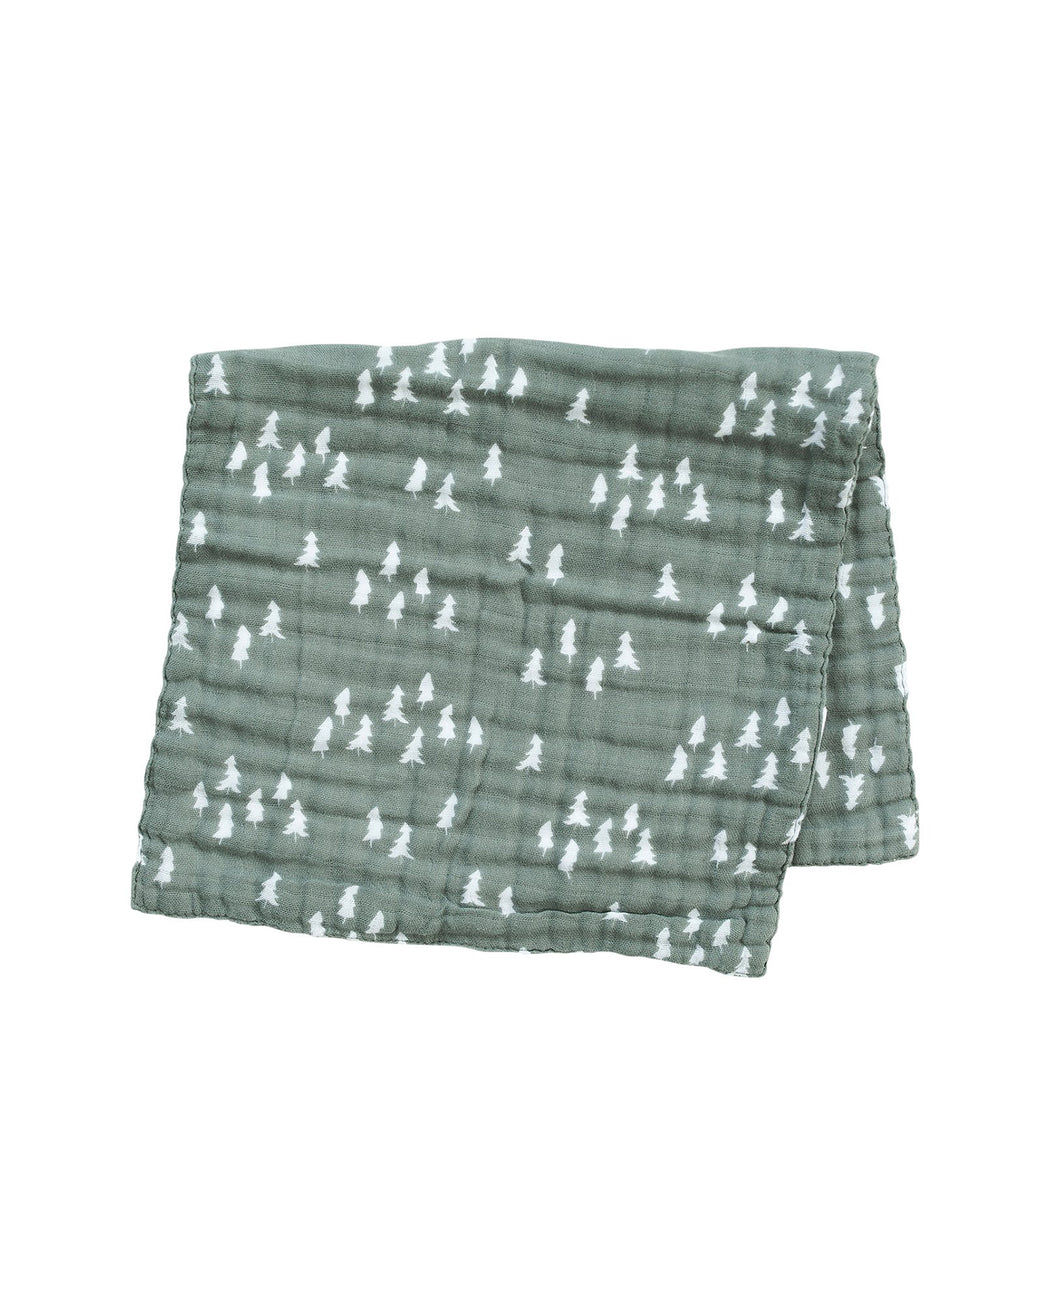 Burp Cloth – Green Pines